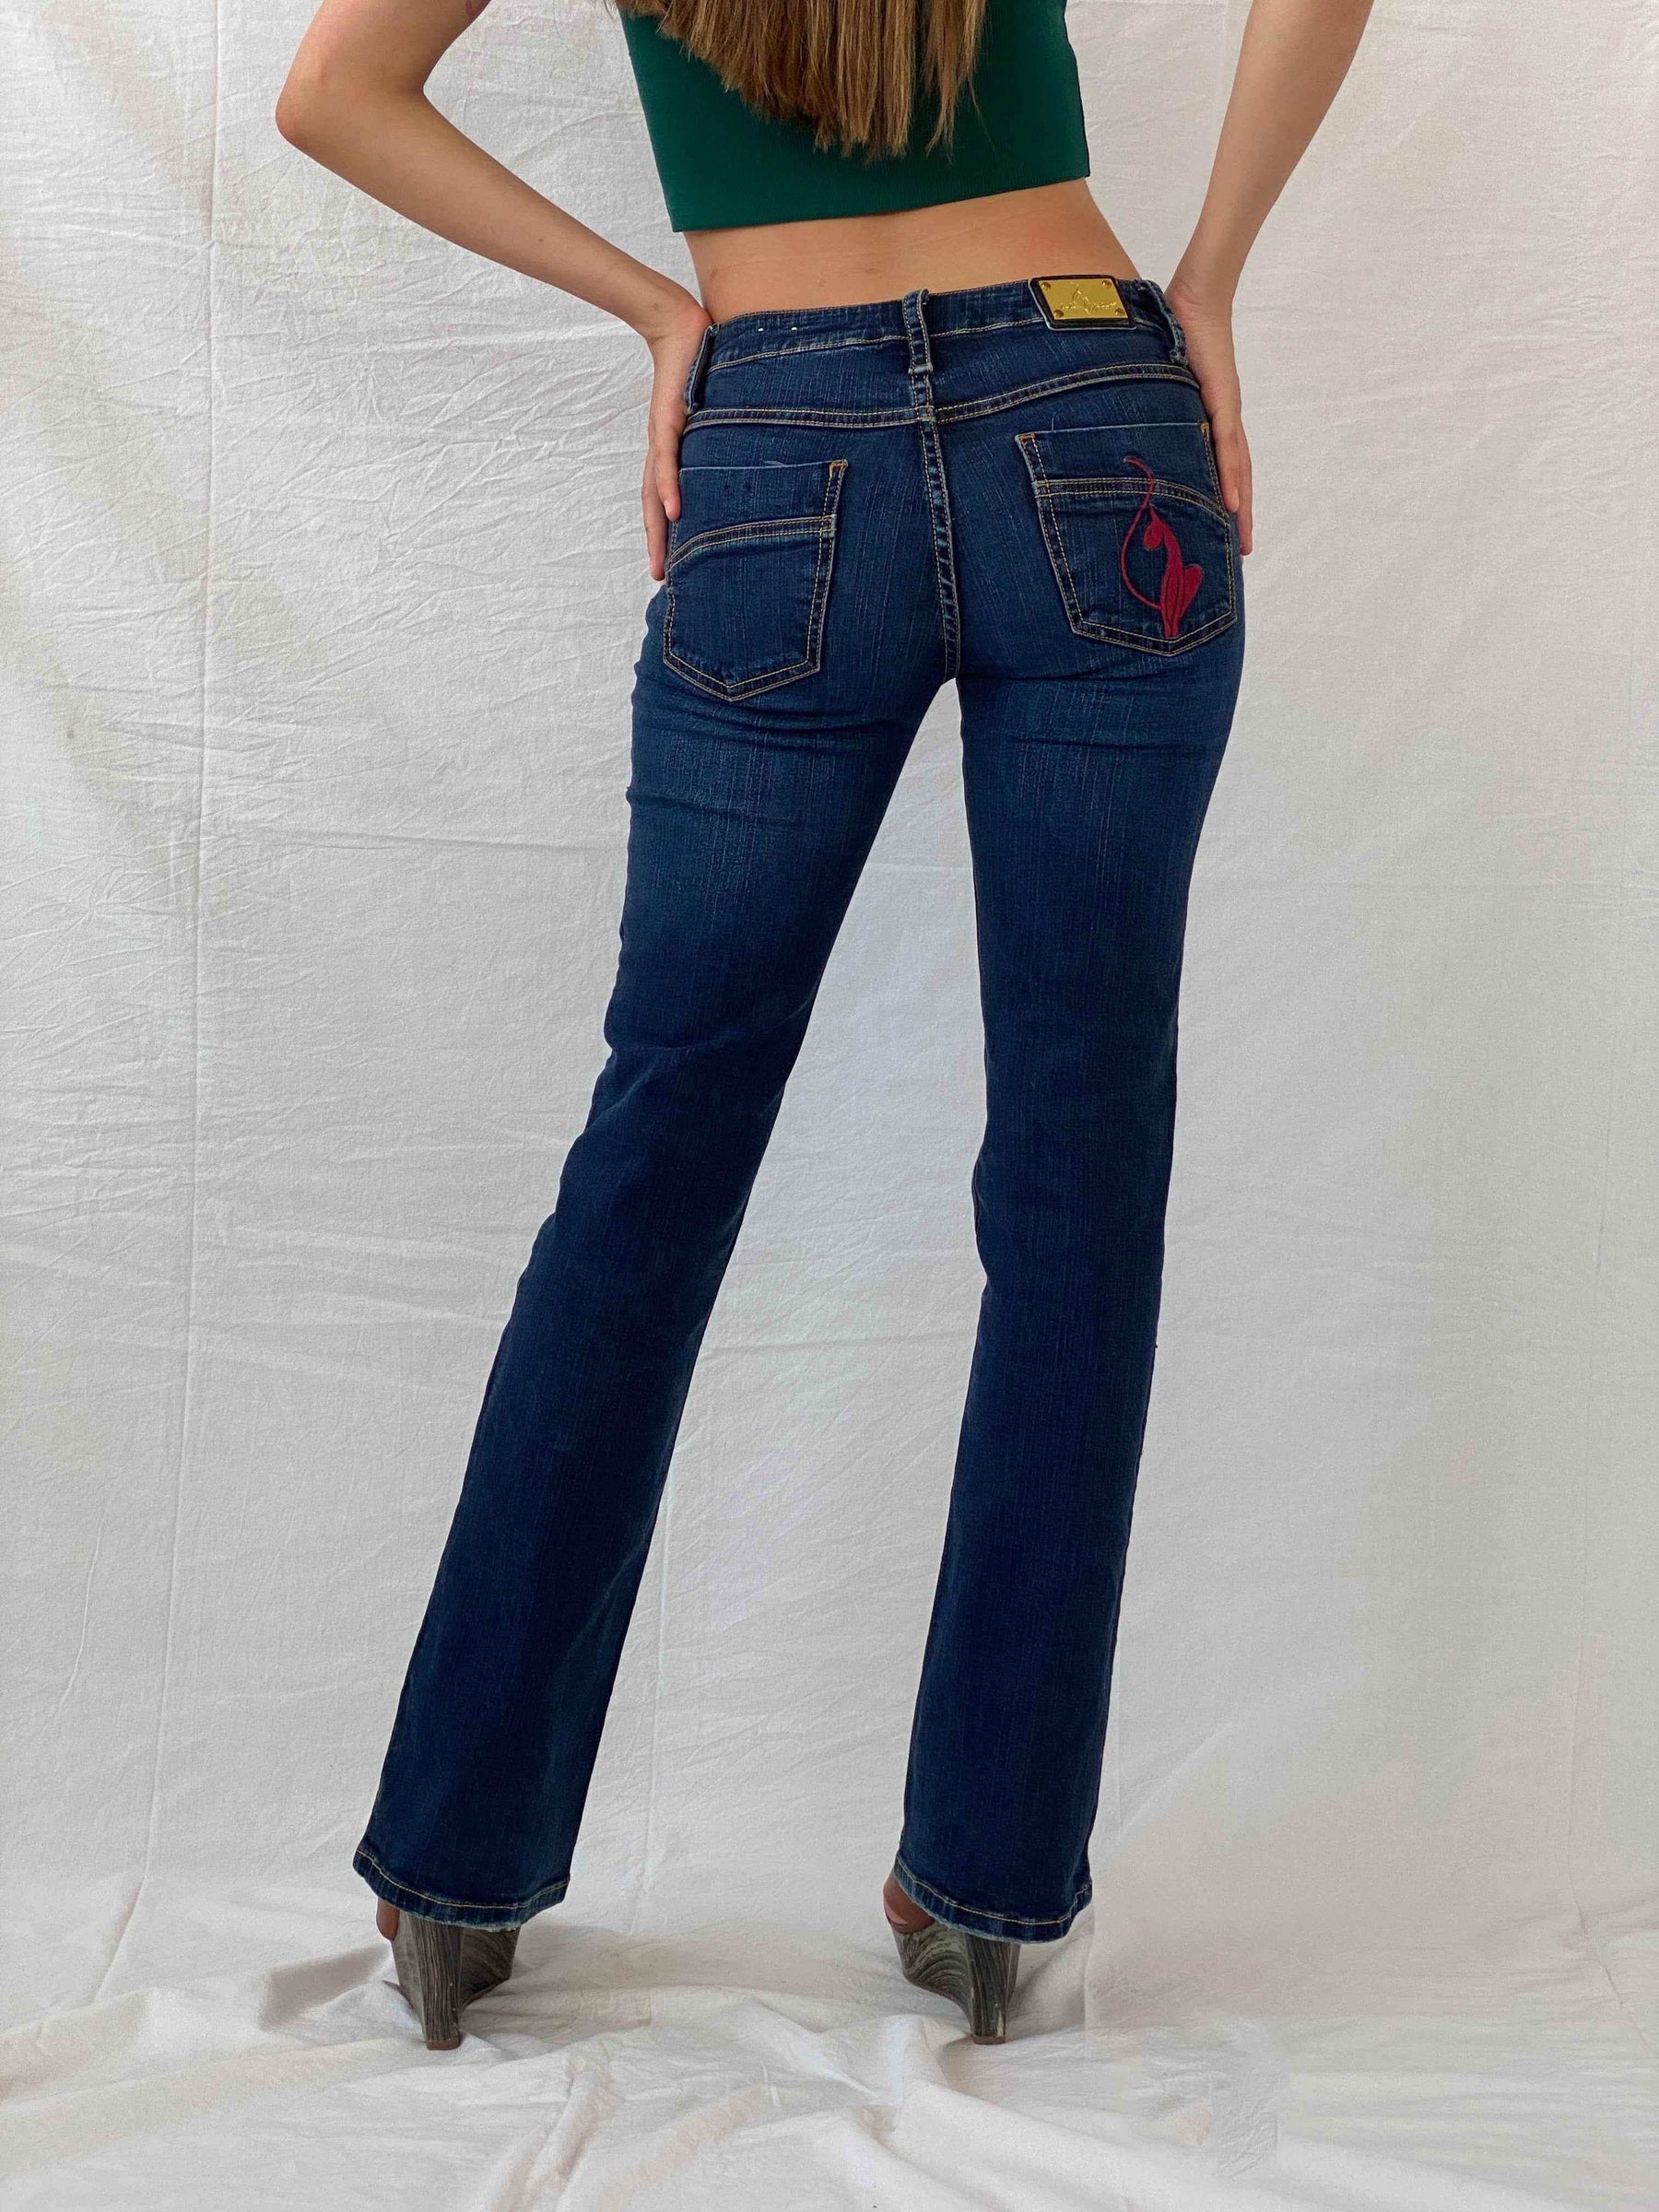 Y2K Baby Phat Low Rise Jeans - Balagan Vintage